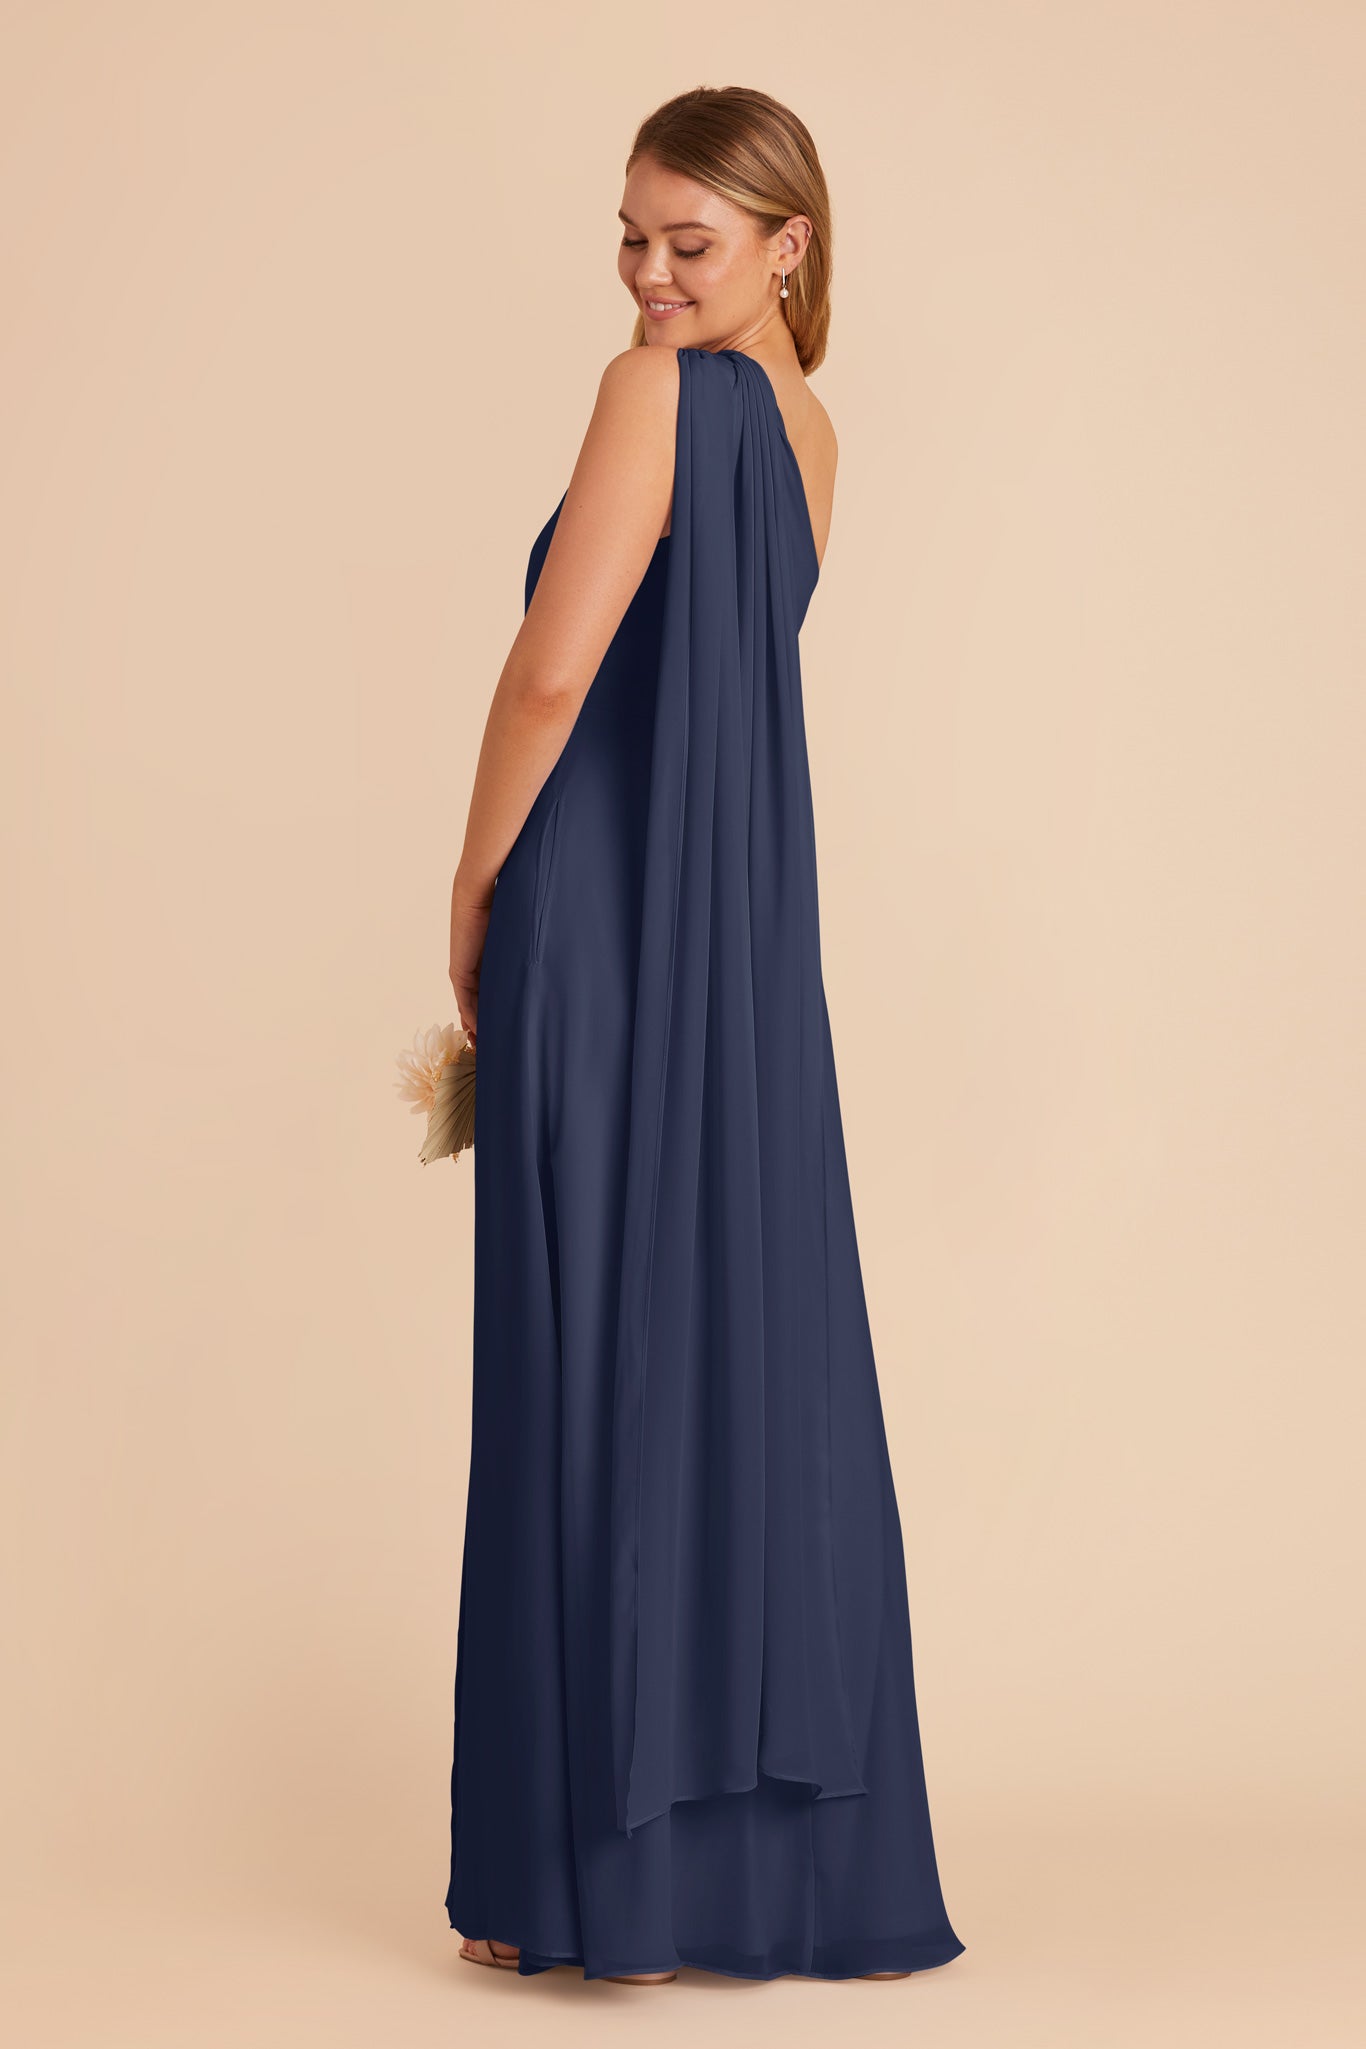 Slate Blue Melissa Chiffon Dress by Birdy Grey